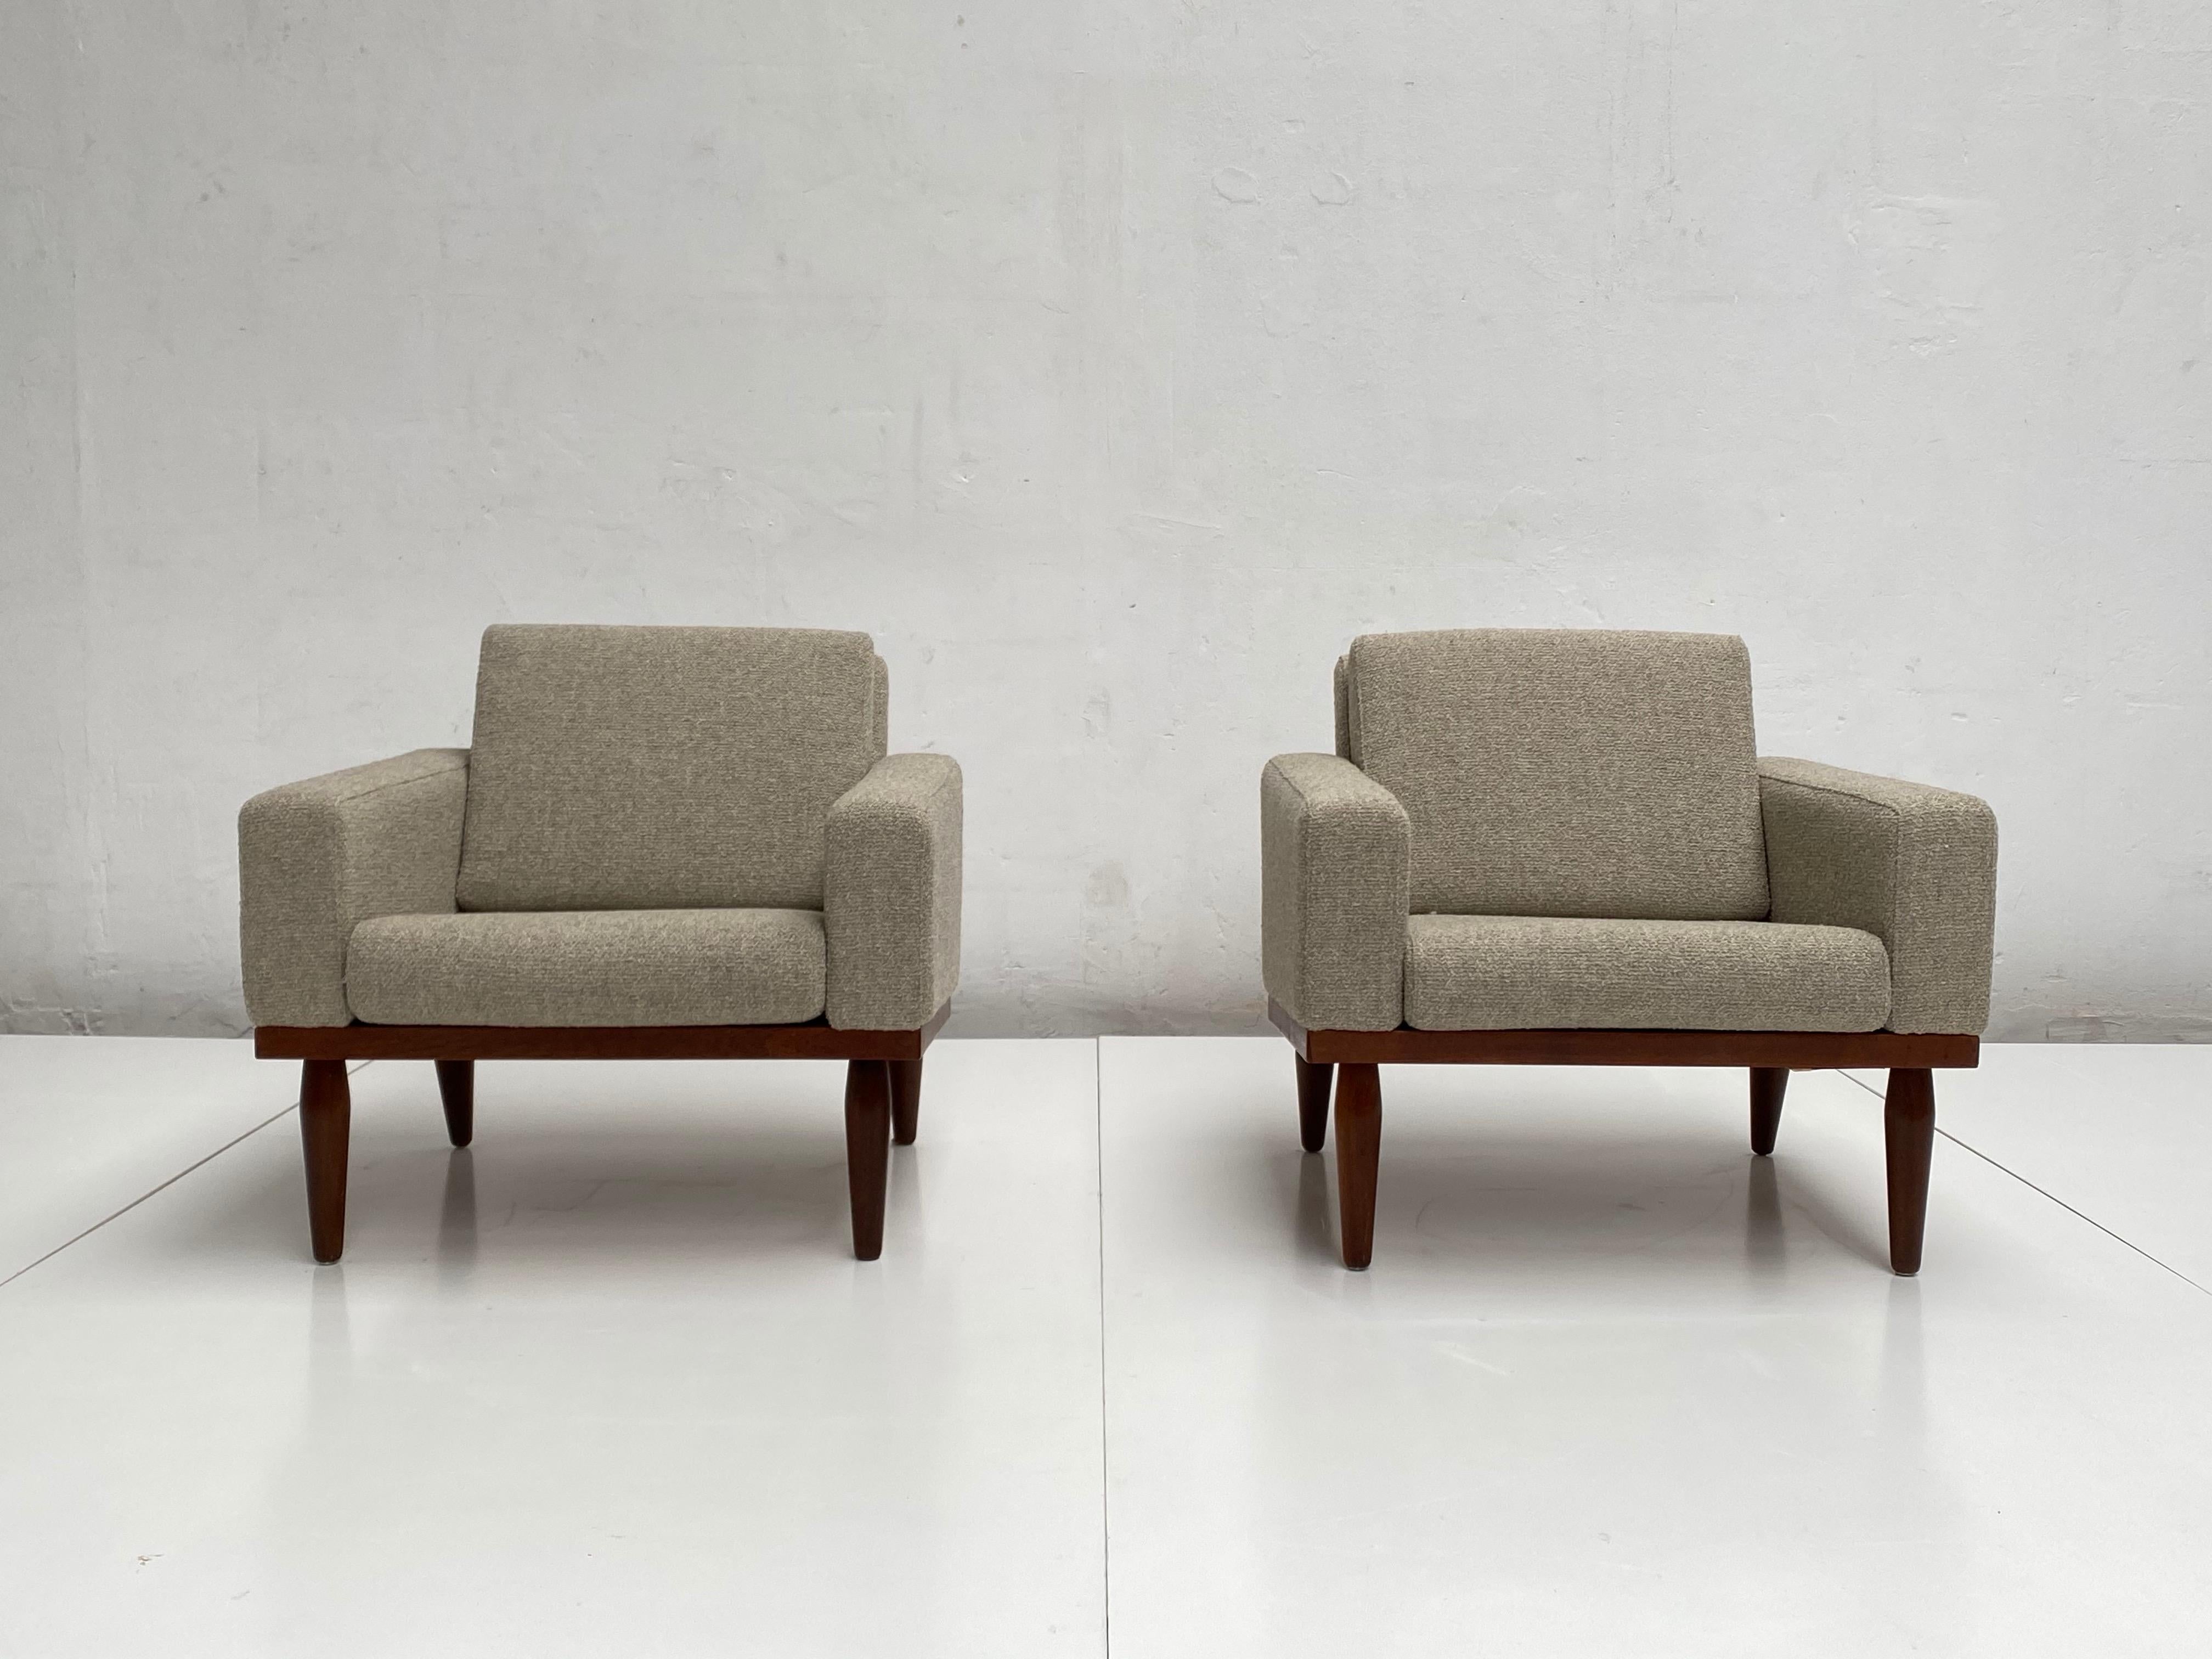 Pair of Danish Teak 1950s Lounge Chairs Bovenkamp The Netherlands New Upholstery For Sale 3